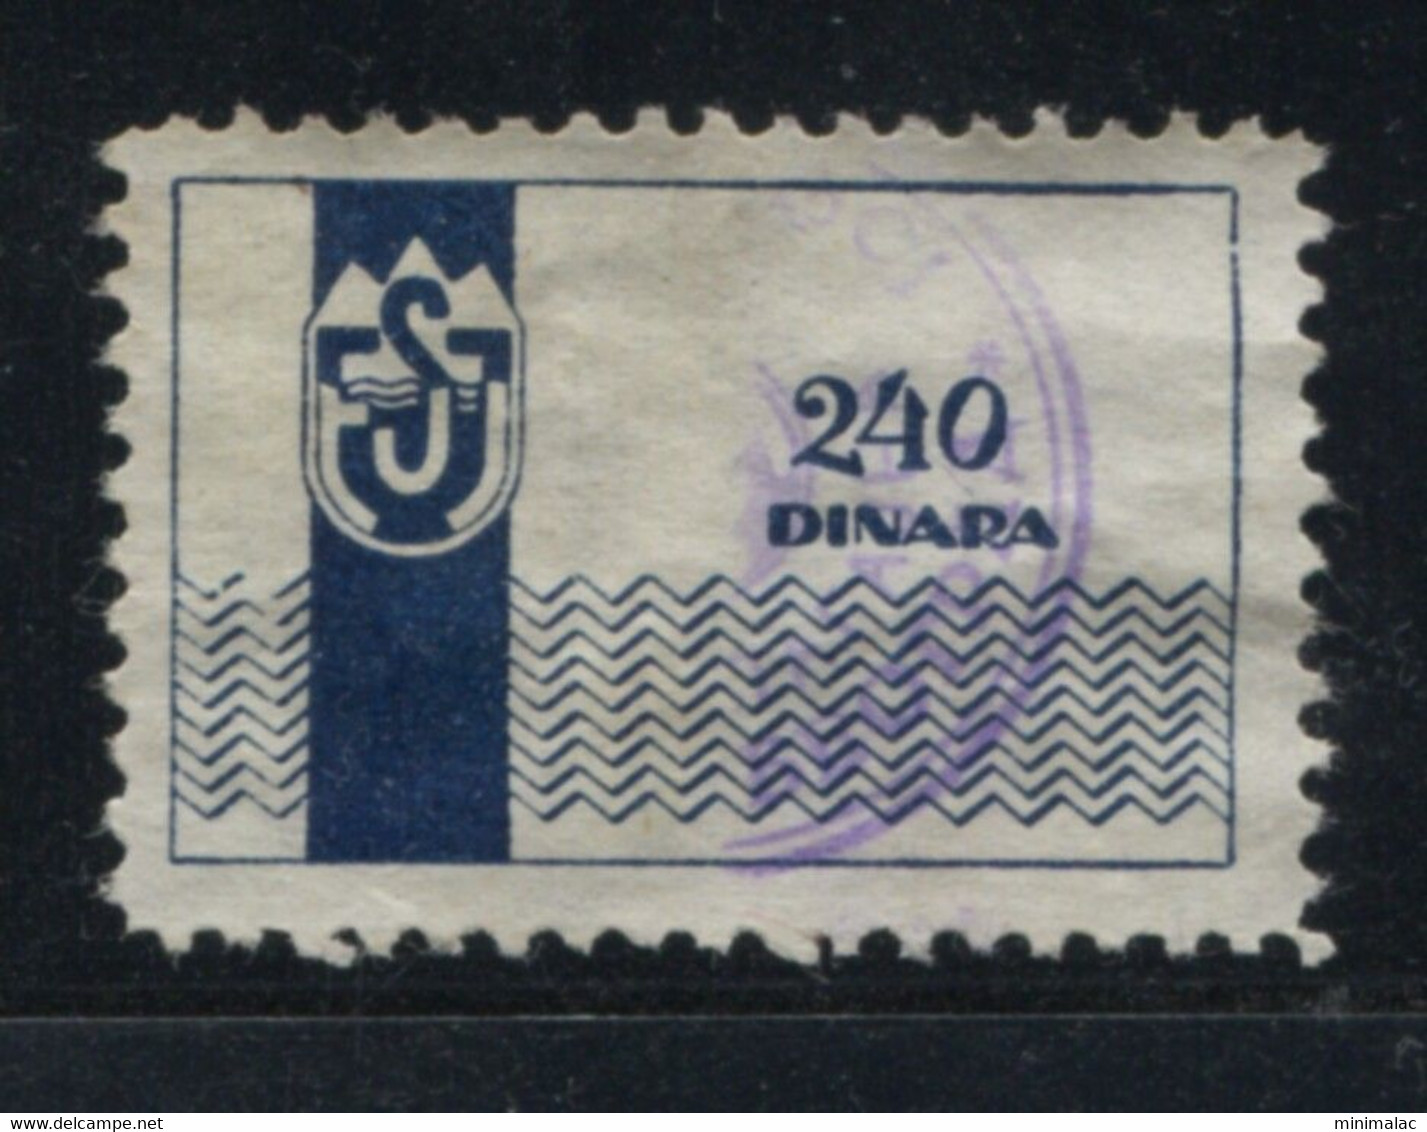 Yugoslavia 1950s, Stamp For Membership Ferijalni Savez - Revenue, Tax Stamp, 240din - Officials